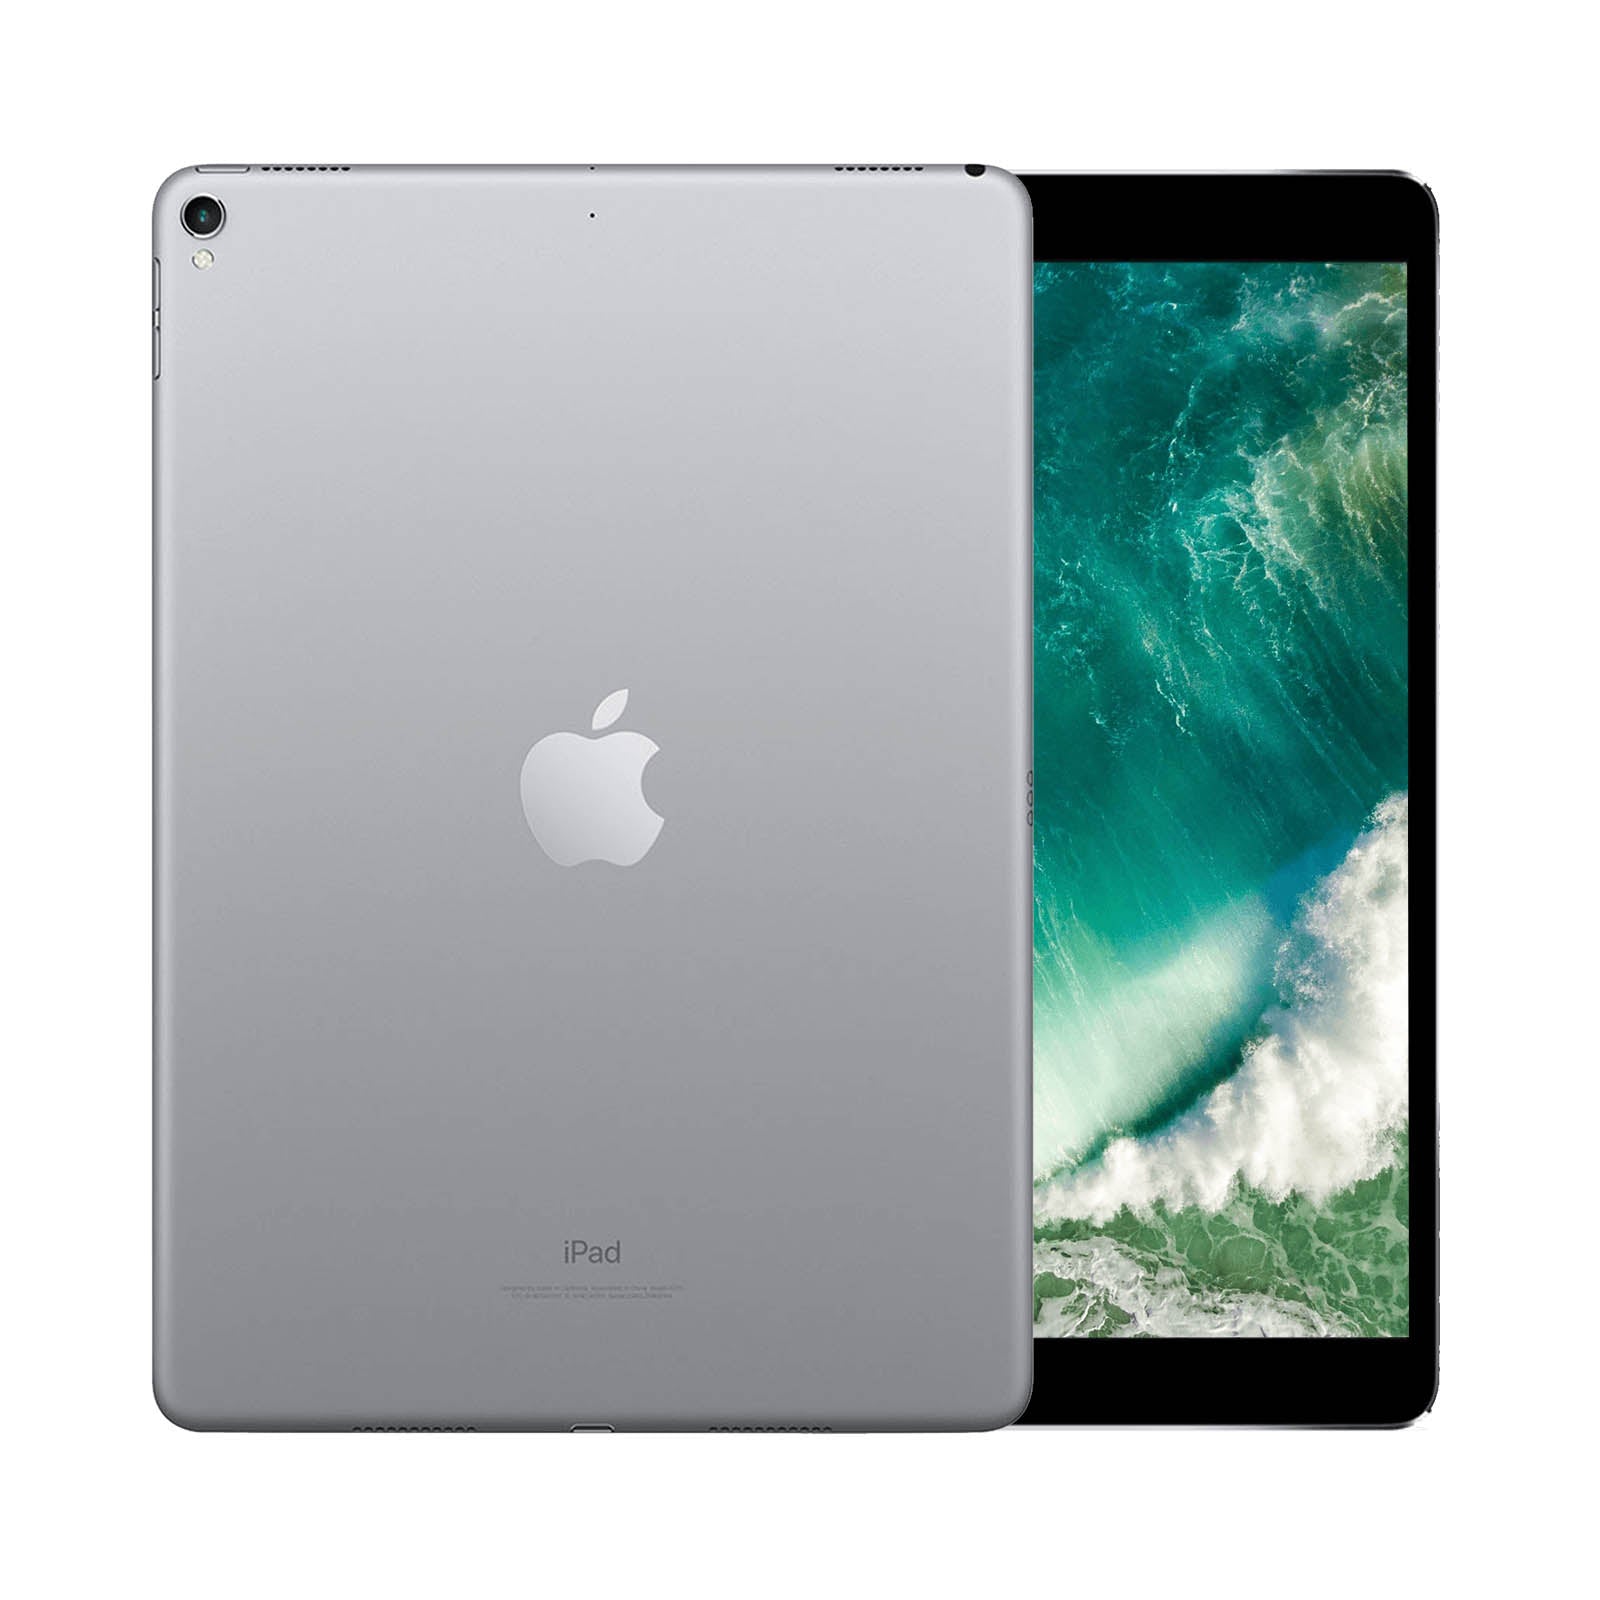 iPad Pro 10.5 Inch 256GB WiFi Space Grau Gut WiFi